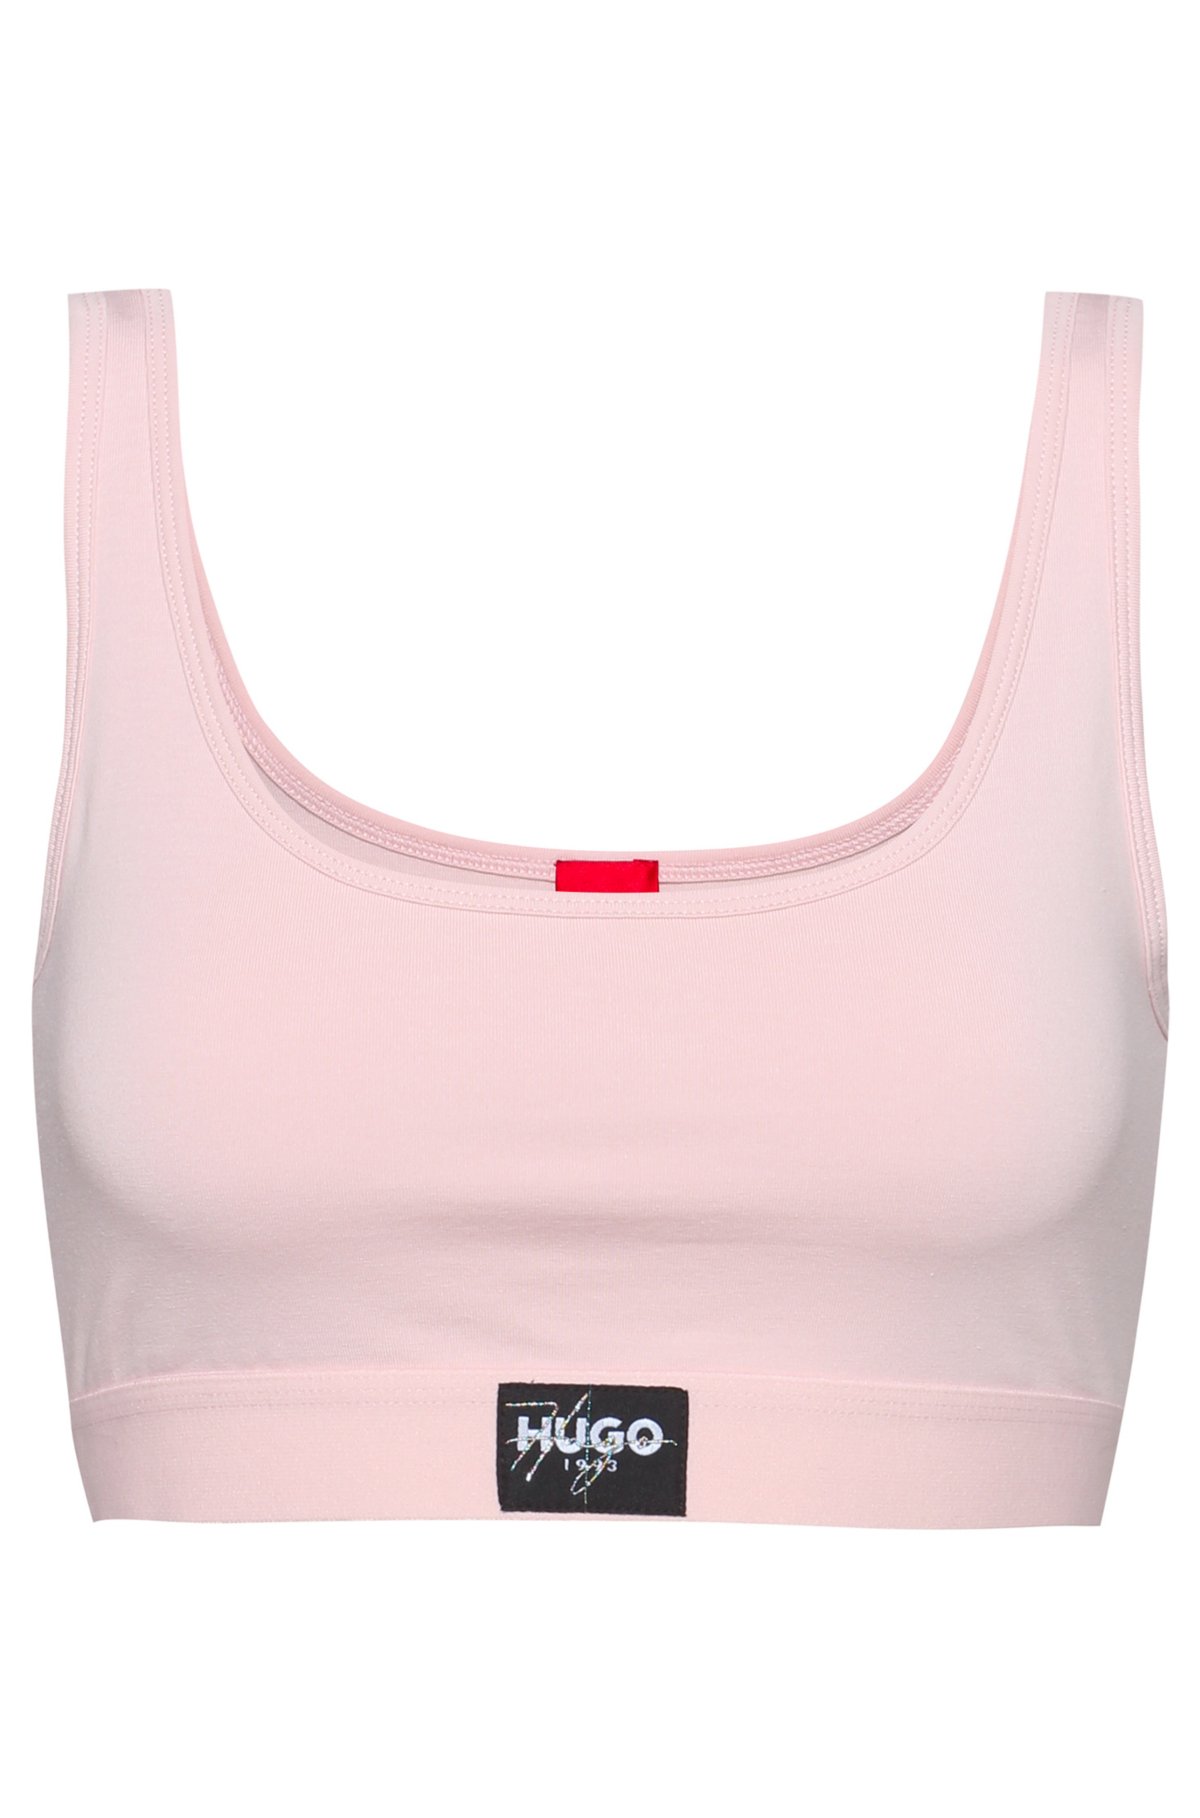 HUGO - Stretch-cotton bandeau bra with red logo label